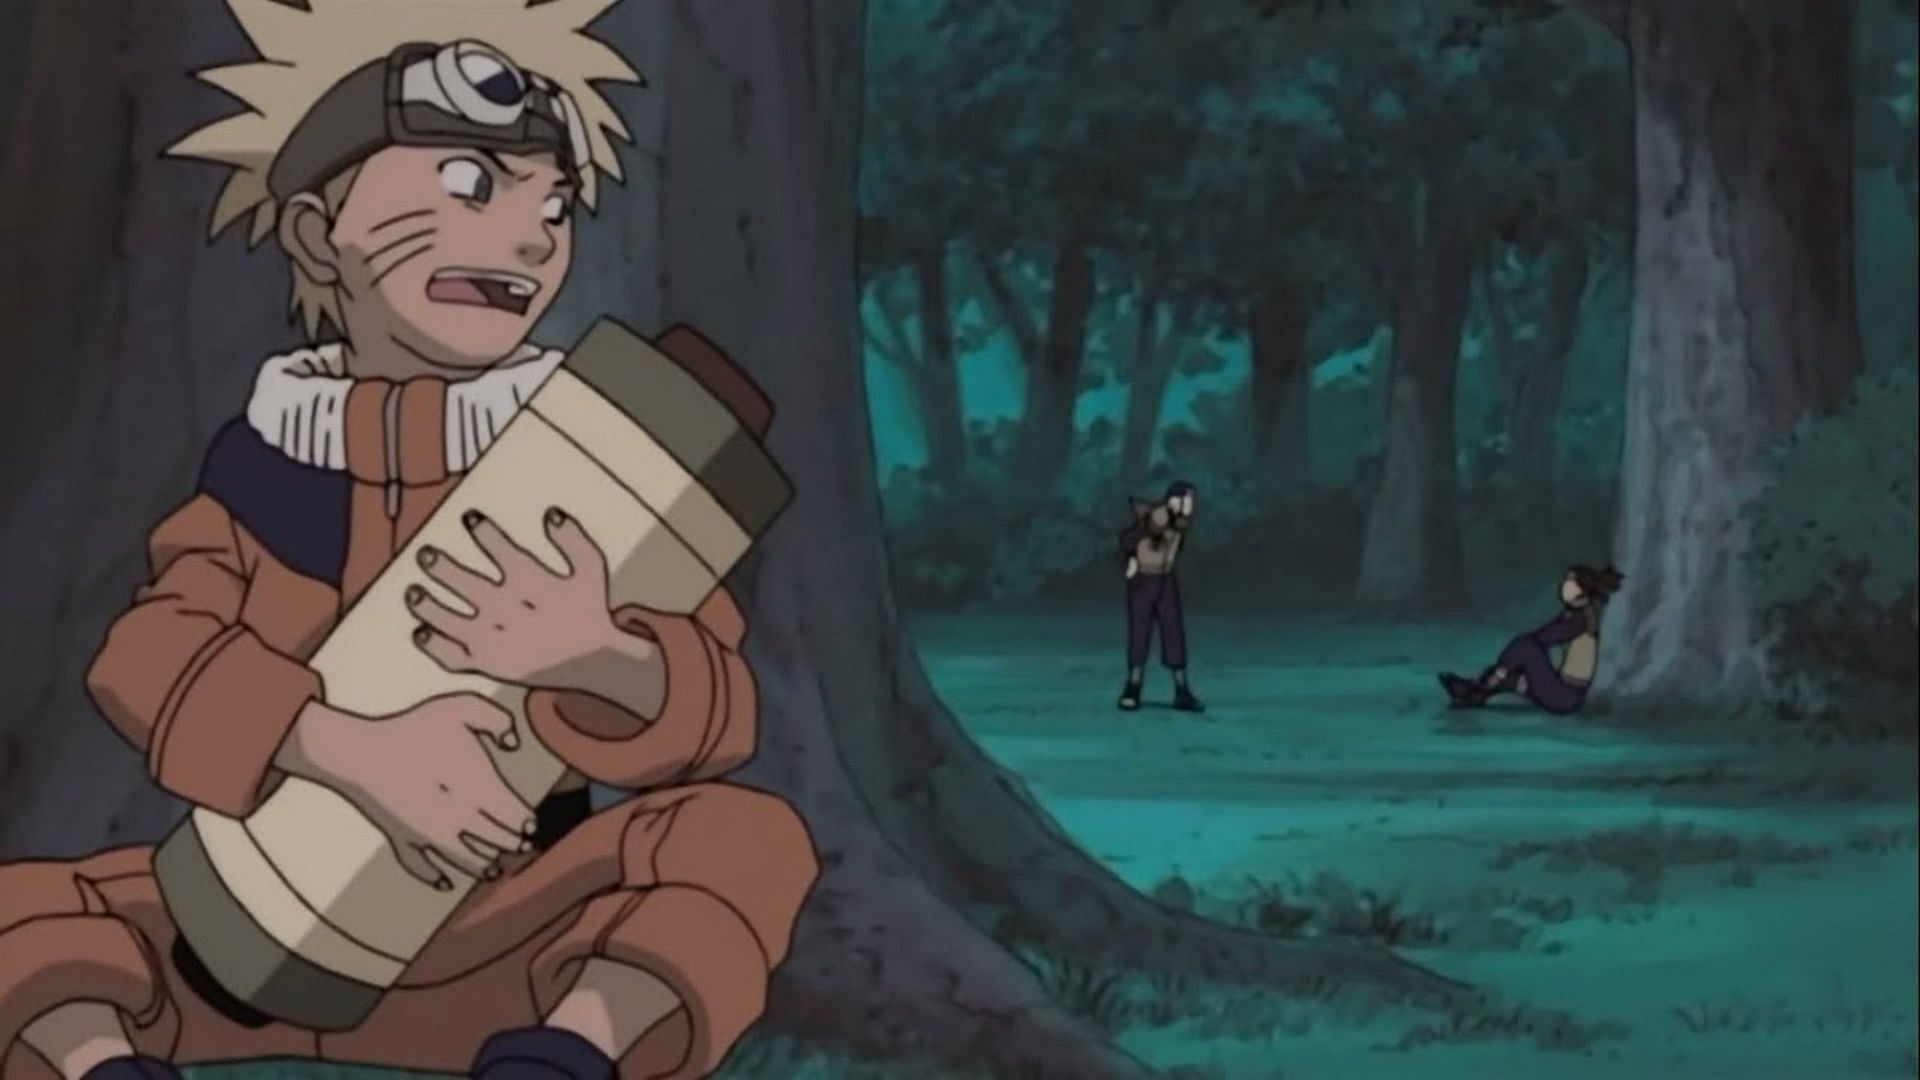 Naruto stealing the Forbidden Scroll in Naruto (Image via Studio Pierrot)